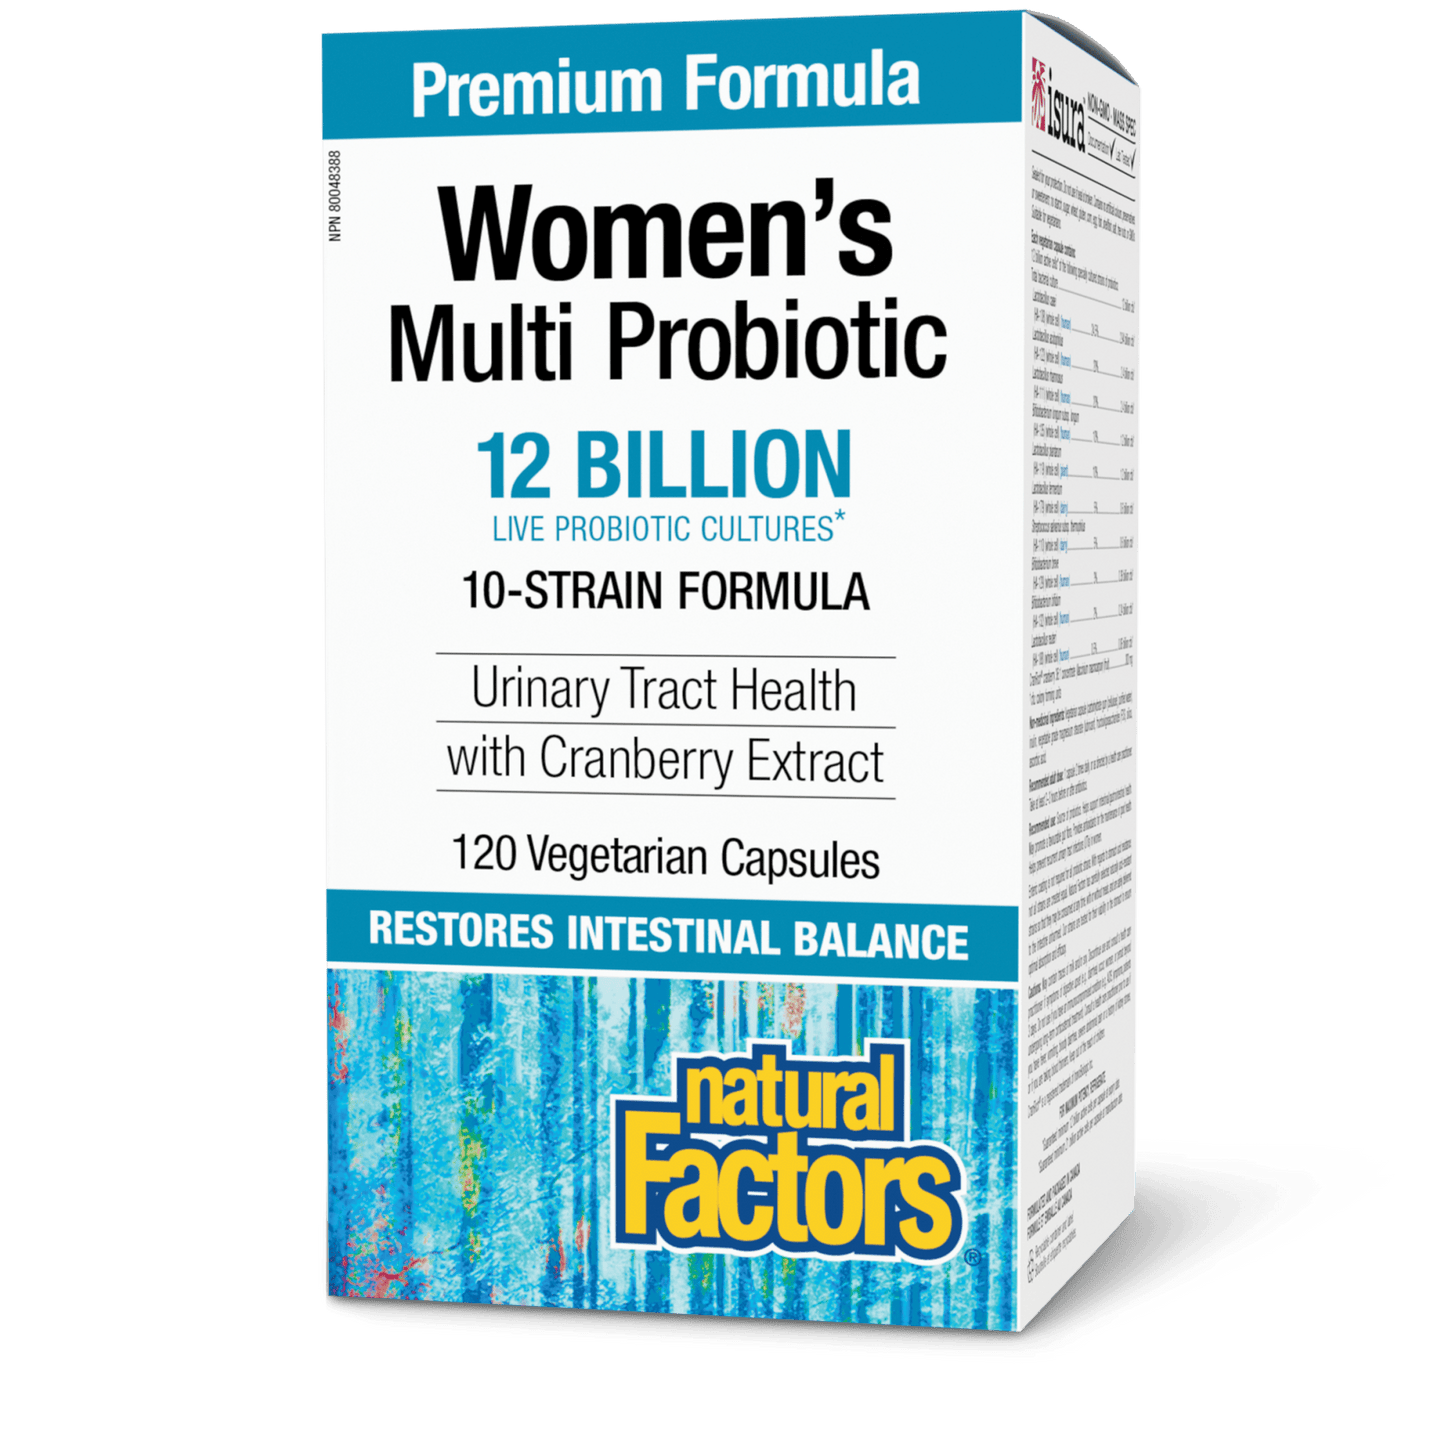 Women’s Multi Probiotic 12 Billion Live Probiotic Cultures, Natural Factors|v|image|1850